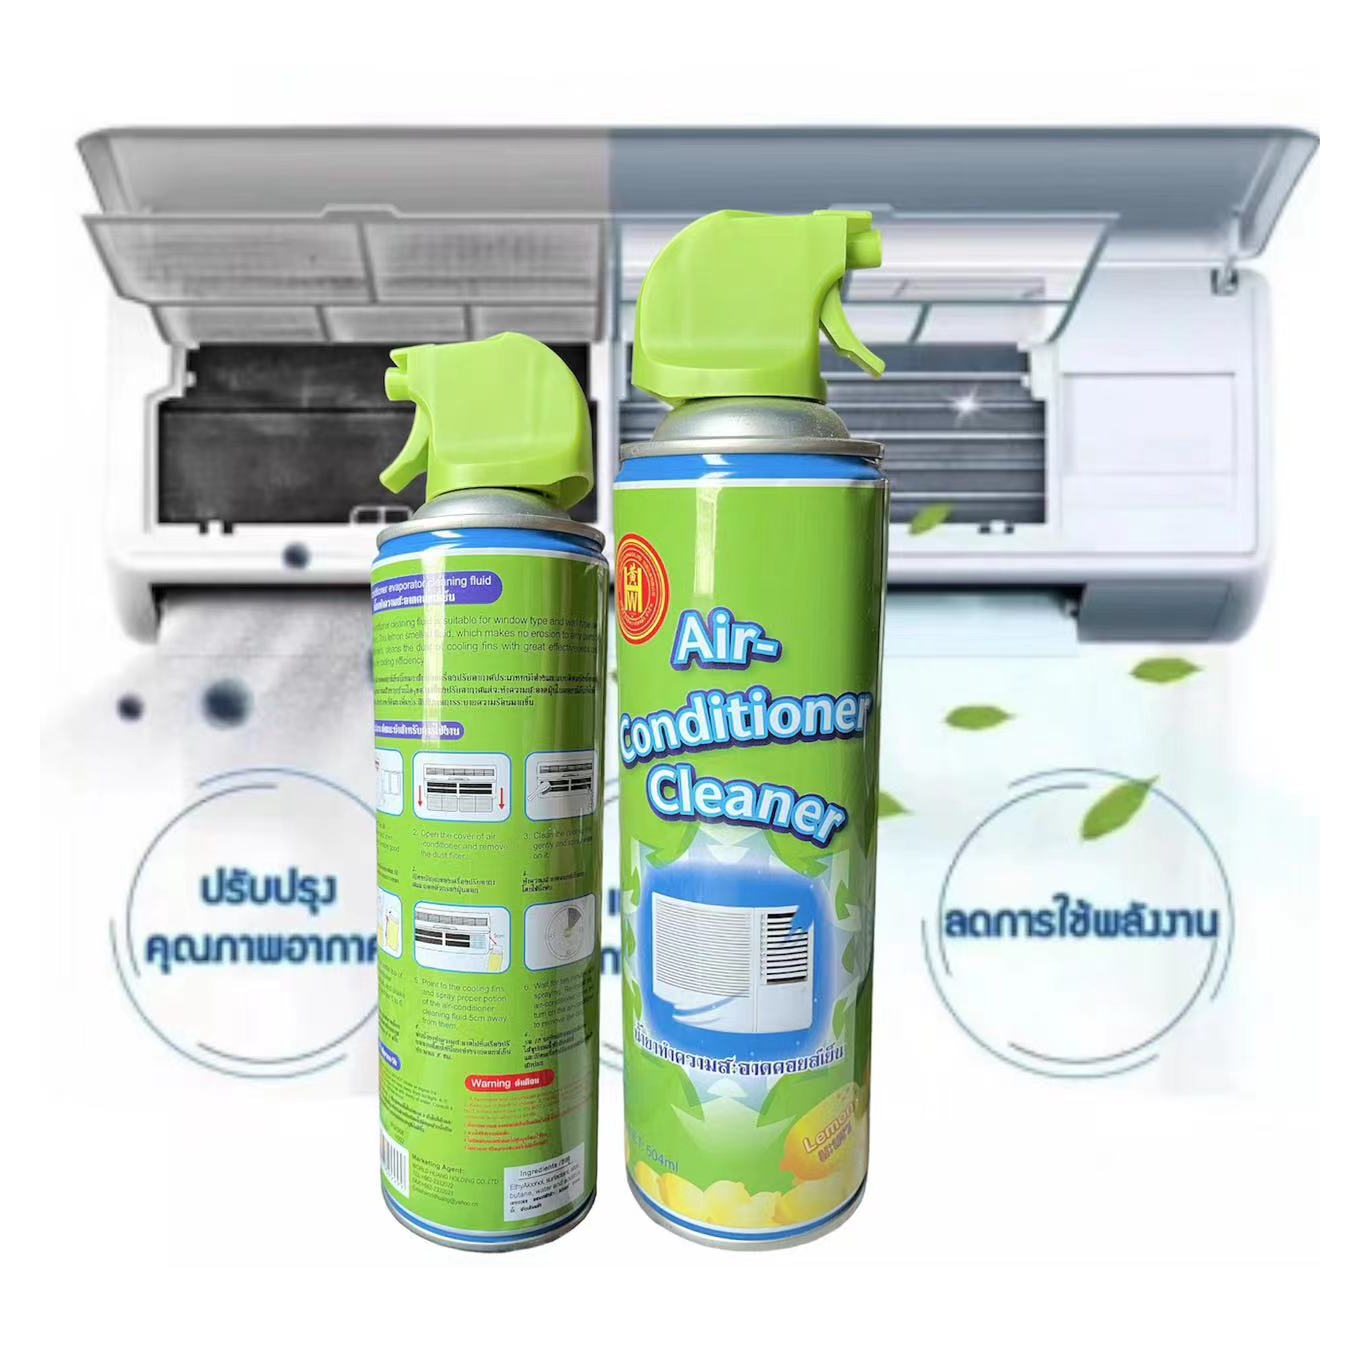 air-conditioner-cleaner-น้ำยาทำความสะอาดคอยส์เย็น-ทำความสะอาดแอร์-น้ำยาแอร์-ล้างแผงคอยล์-แอร์บ้าน-ล้างแอร์เอง